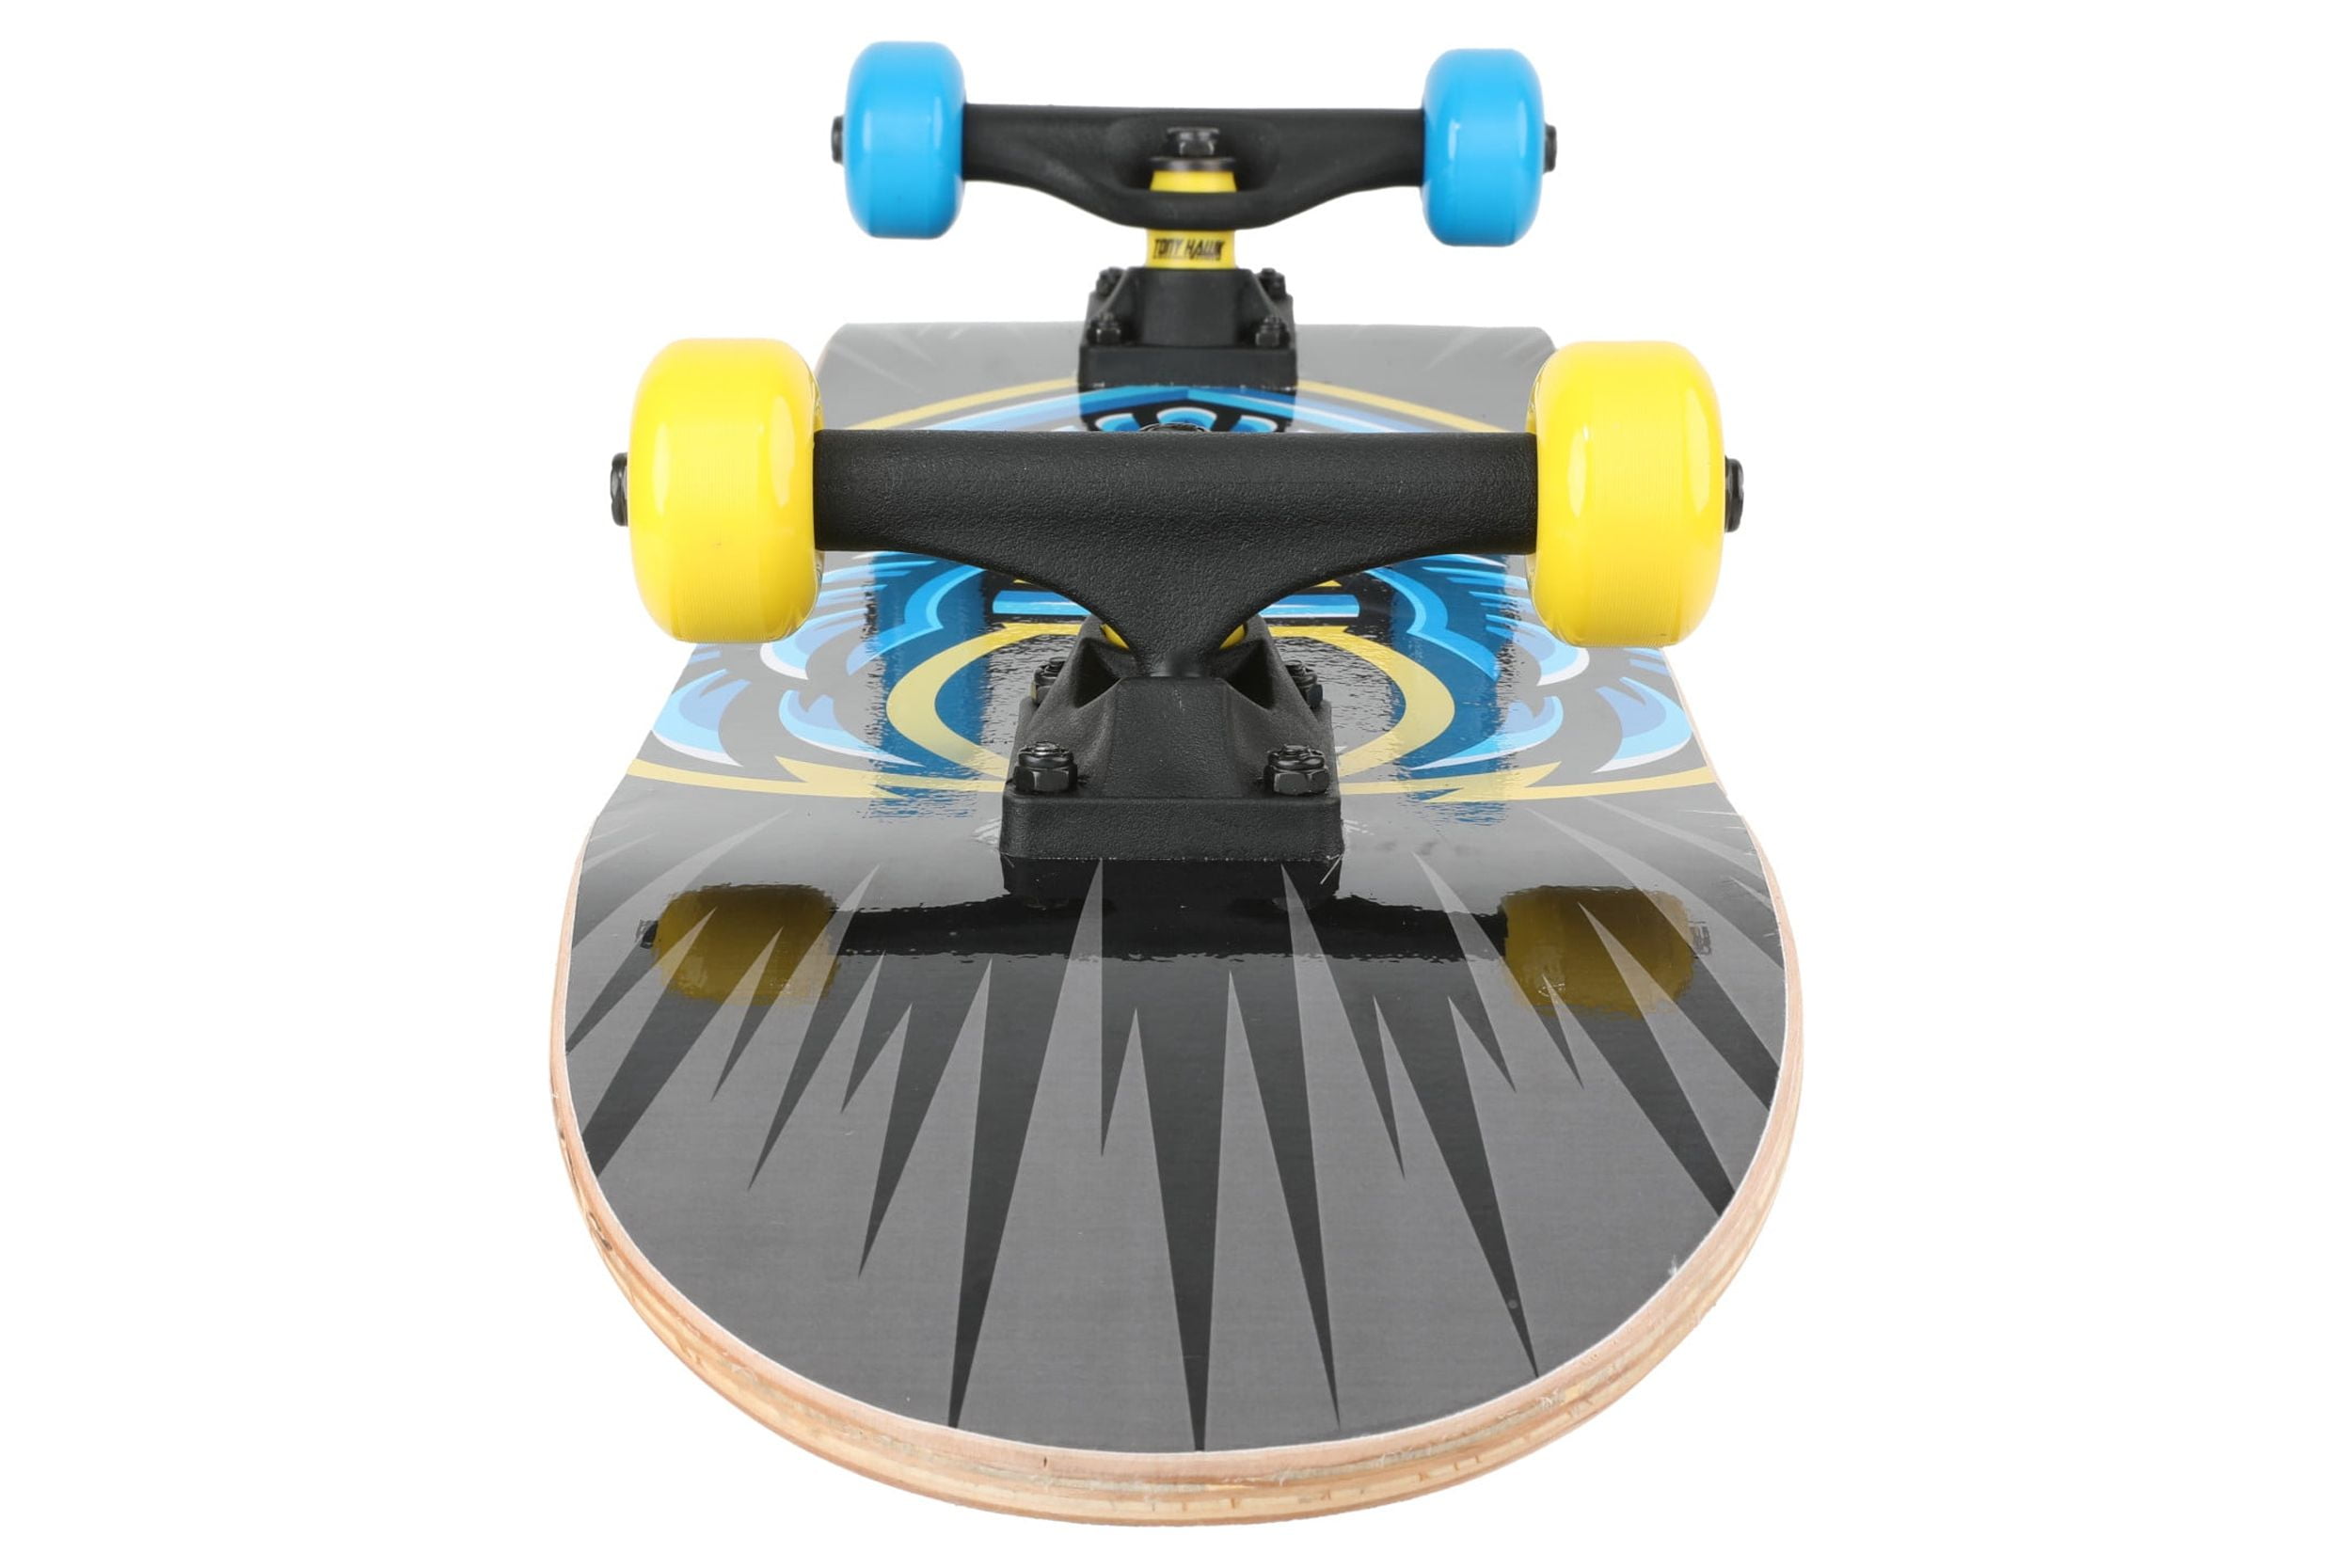 Tony Hawk 31 Pro Skateboard - Abec 5